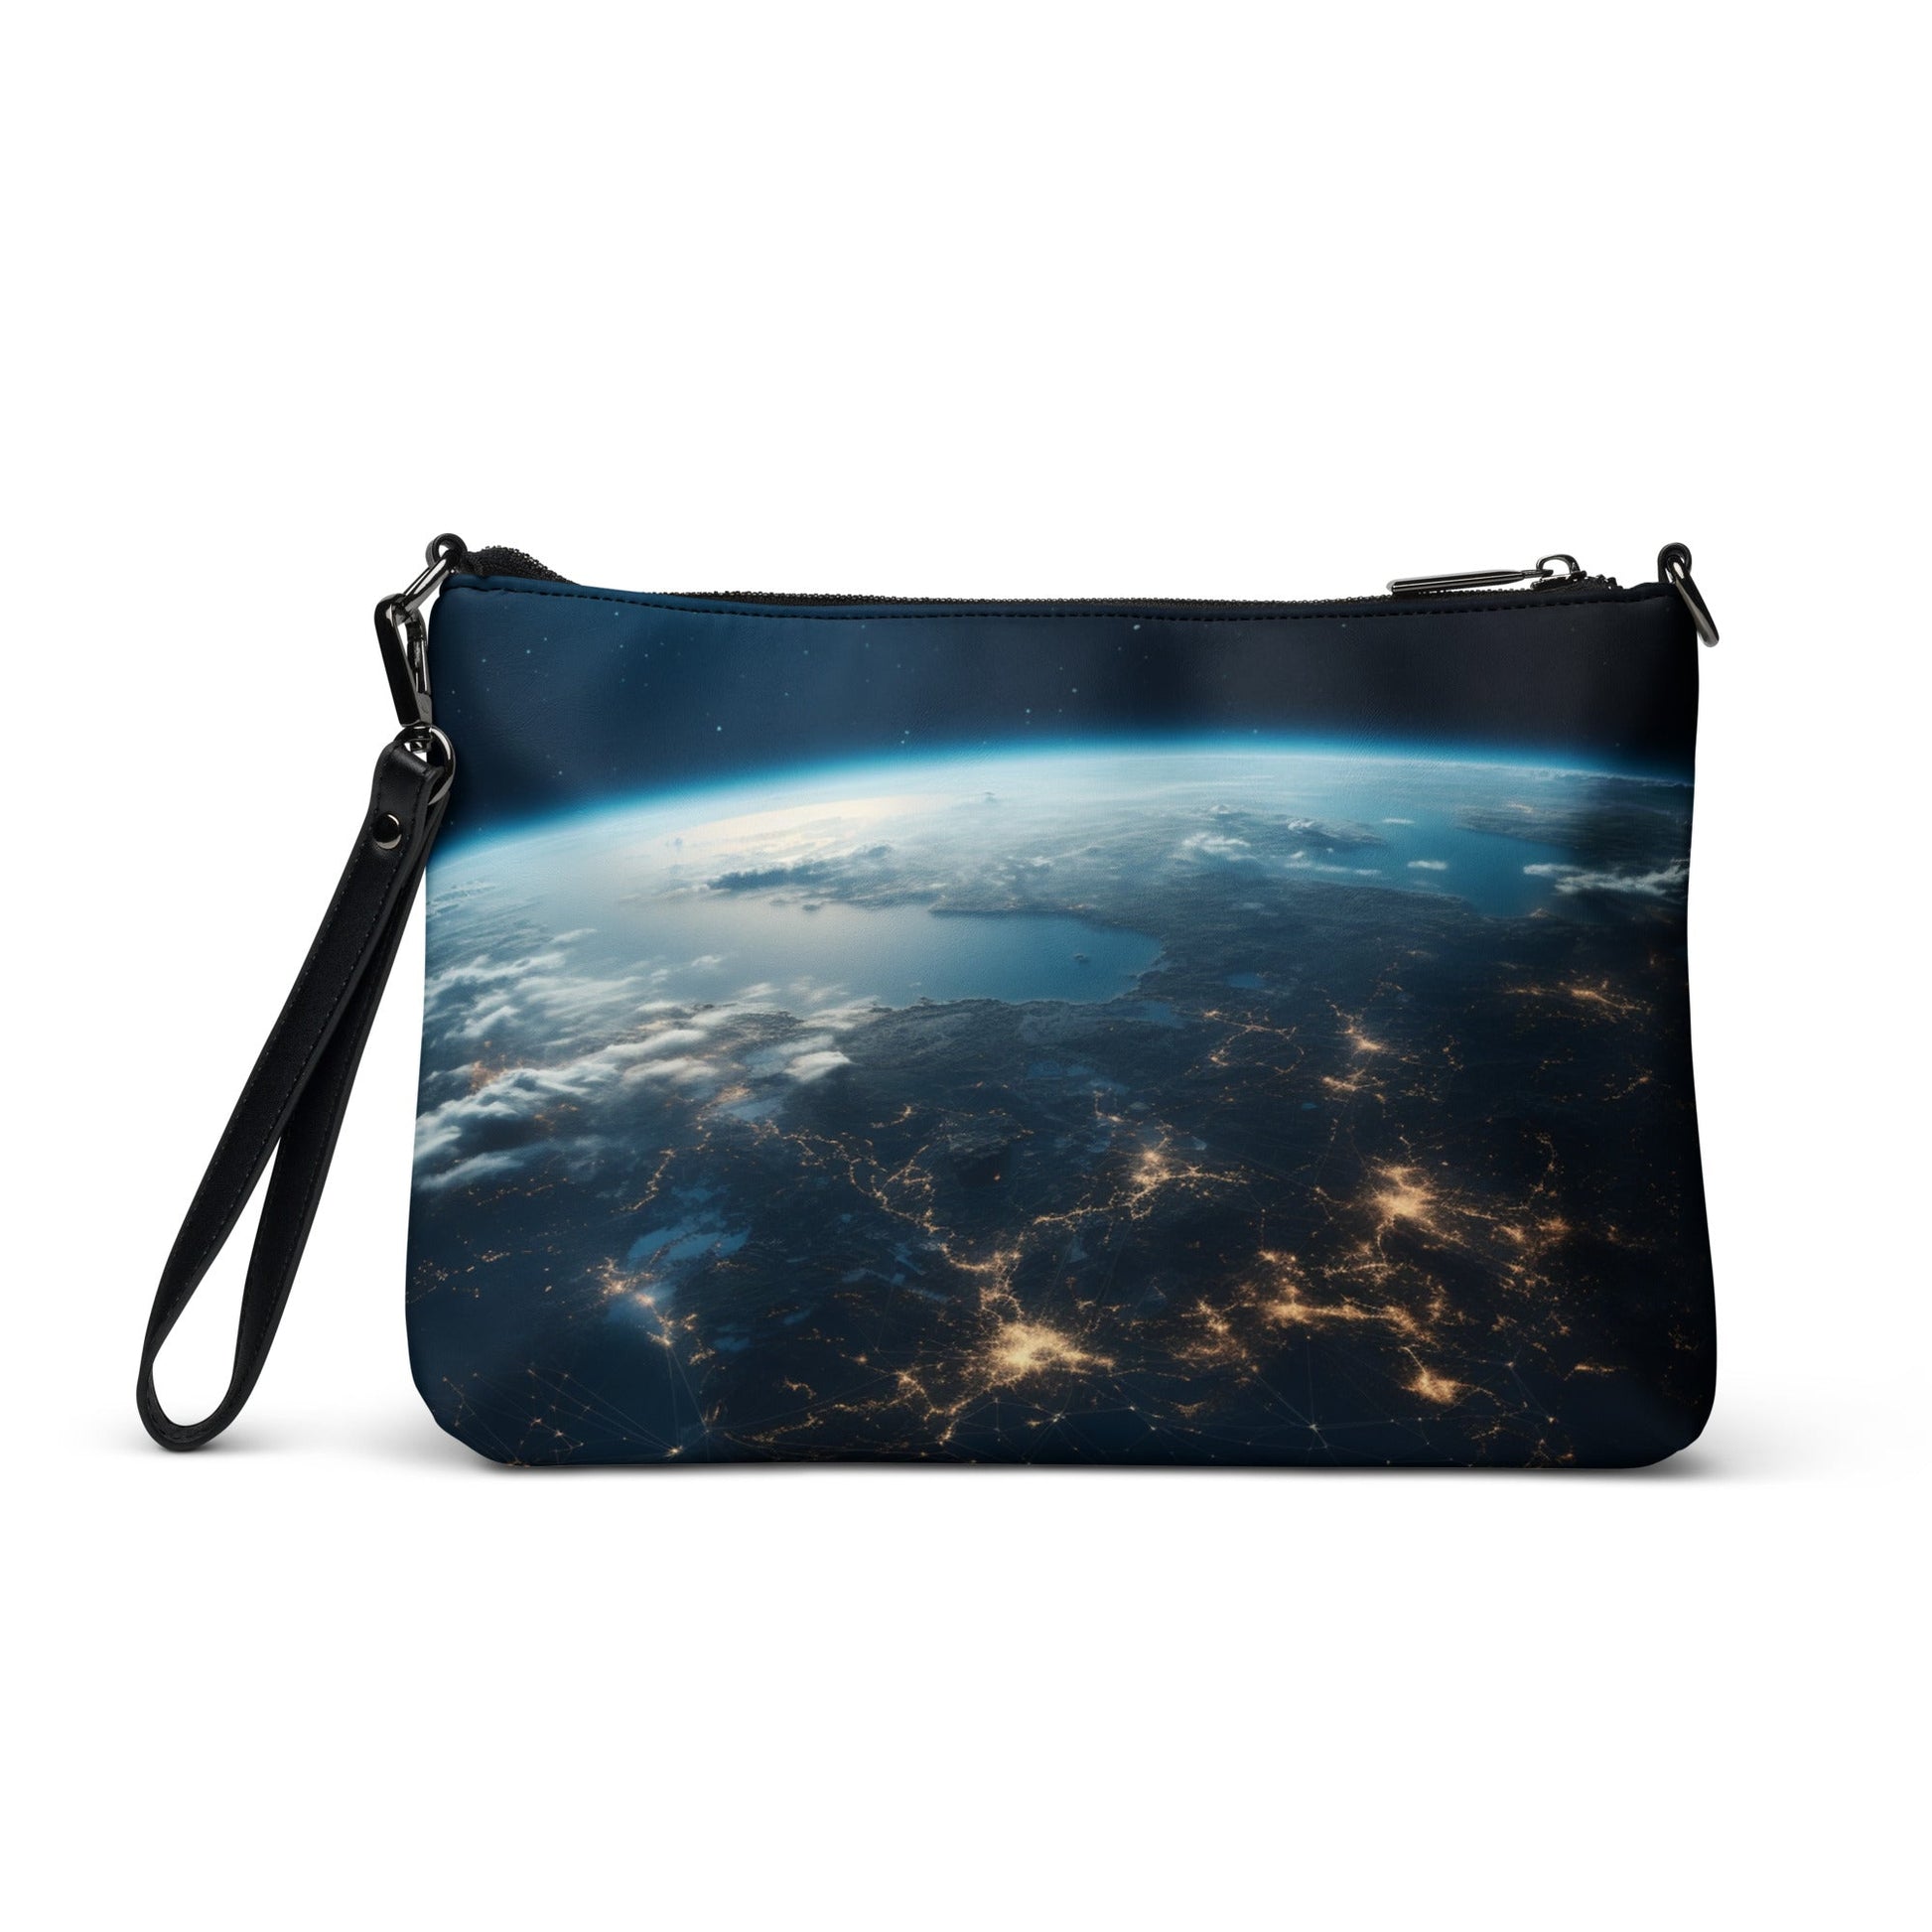 5 BILJON Global Crossbody bag by Neduz Designs